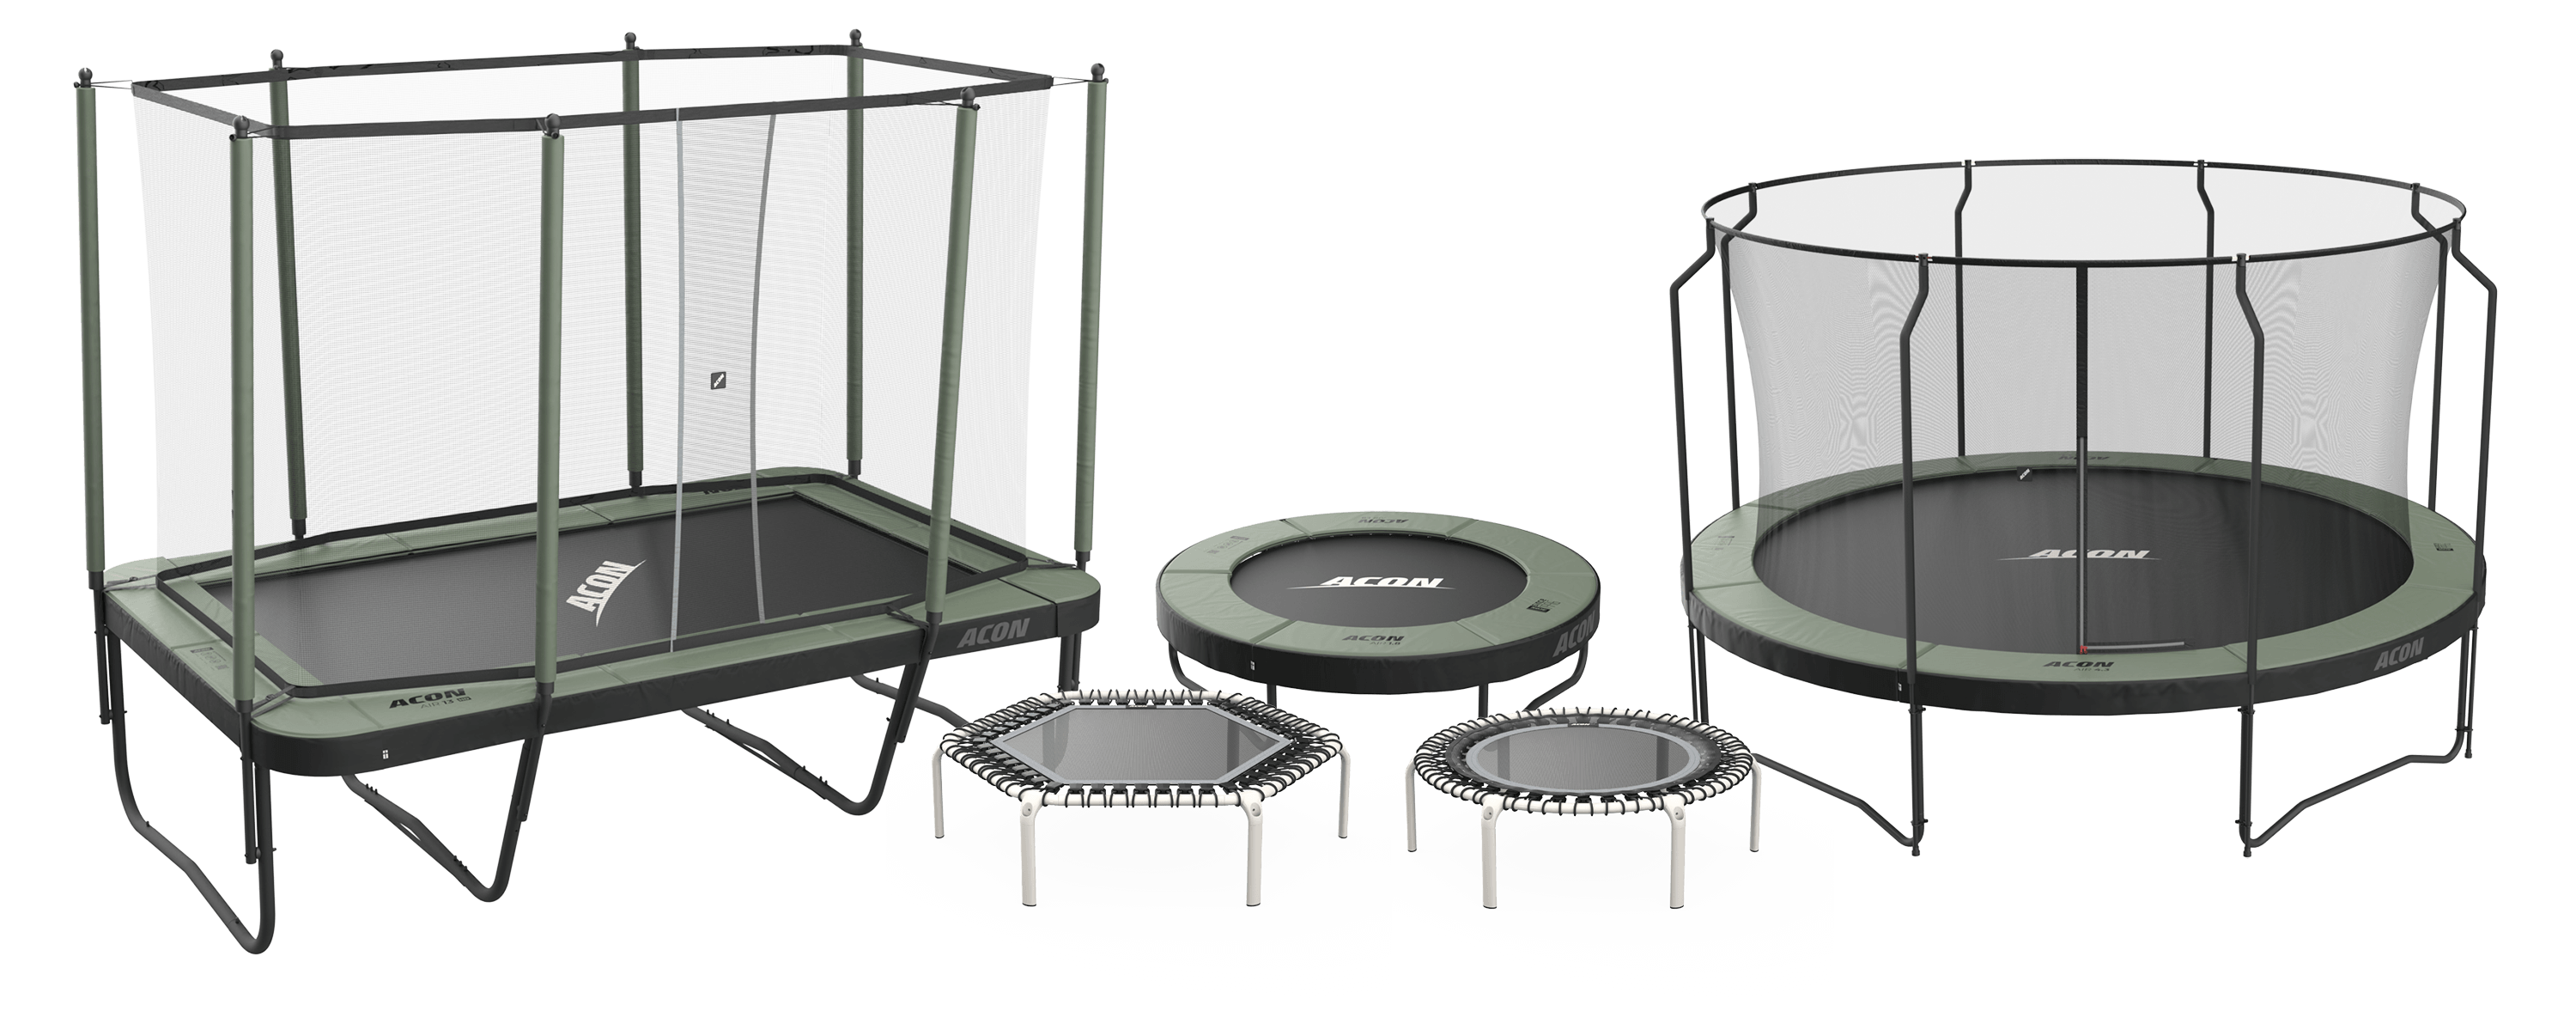 Different trampoline types: rectangular trampoline, mini trampoline, round trampoline and rebounders.